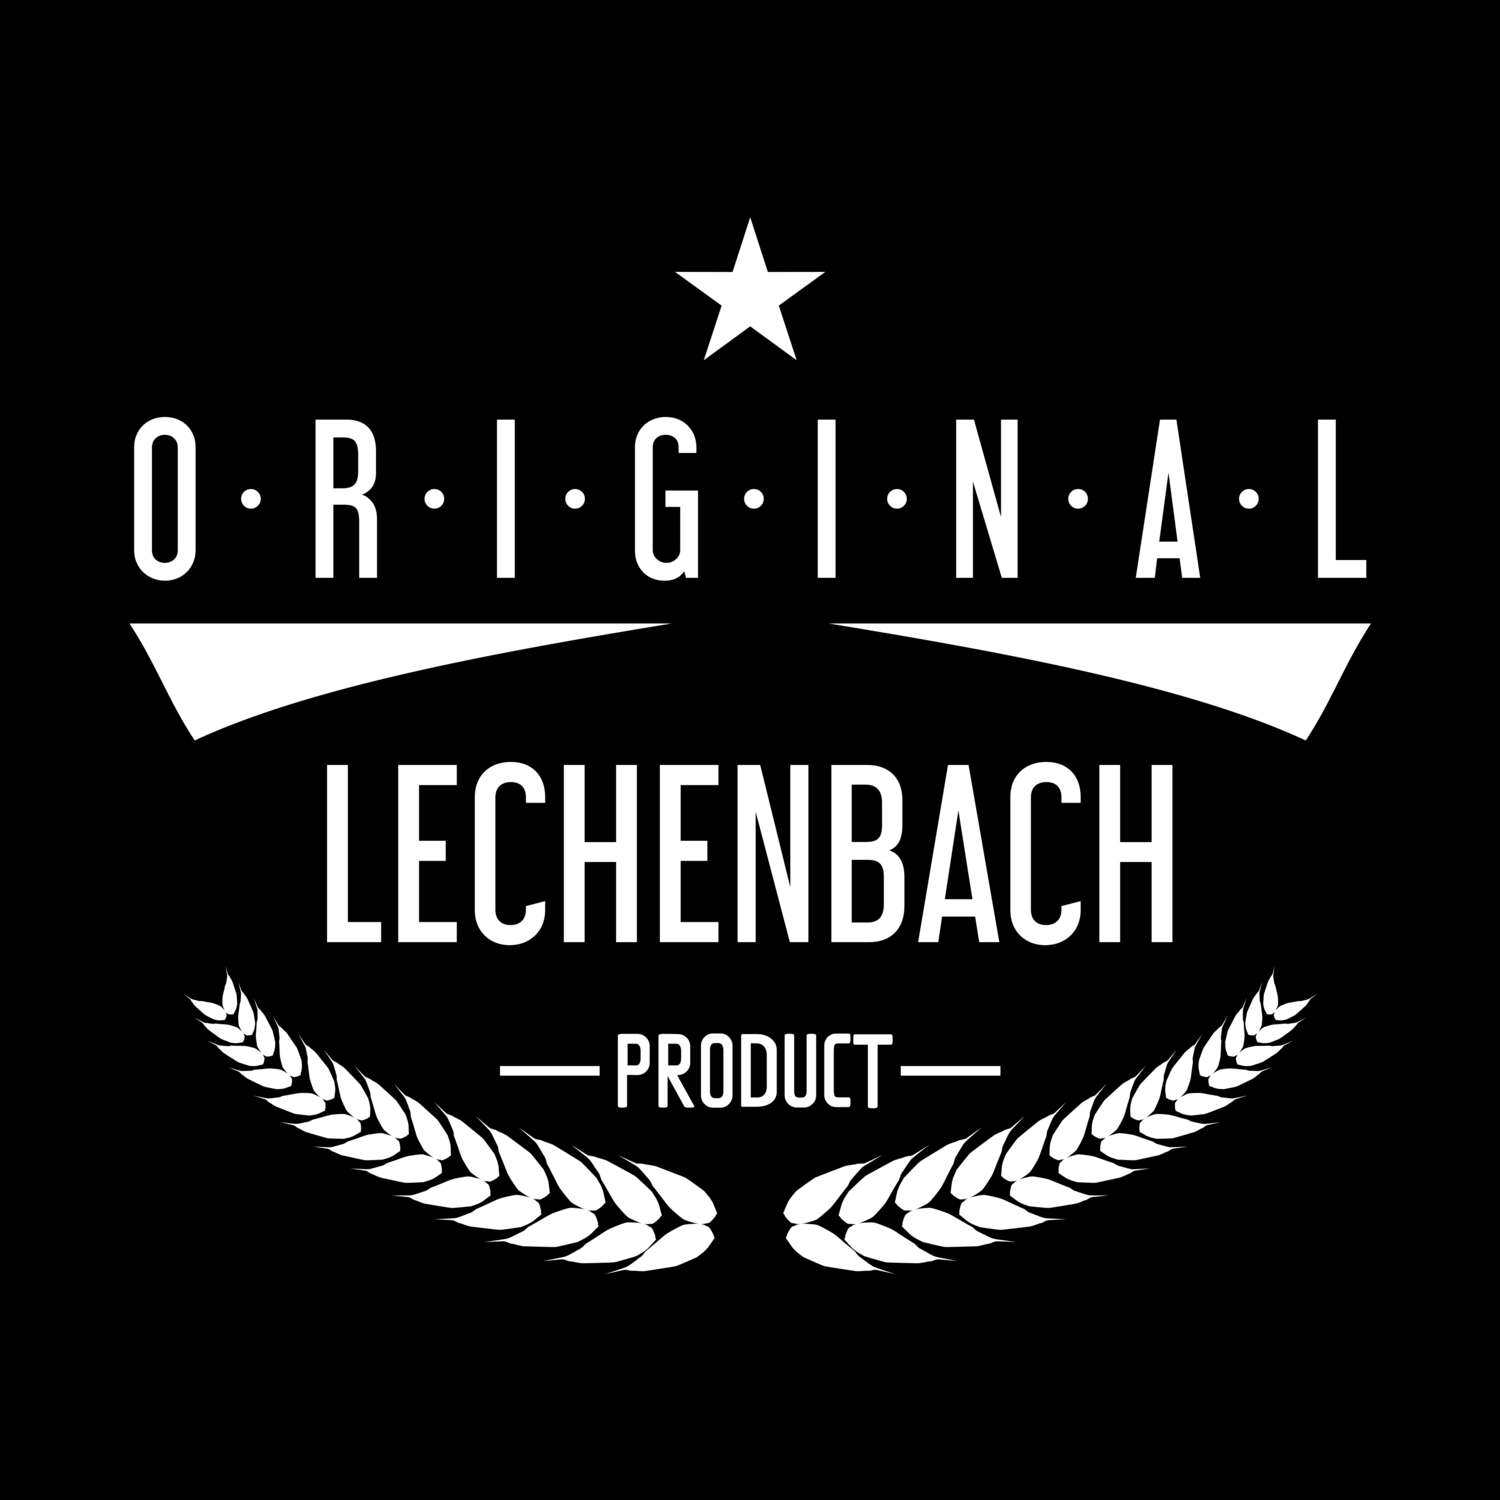 Lechenbach T-Shirt »Original Product«